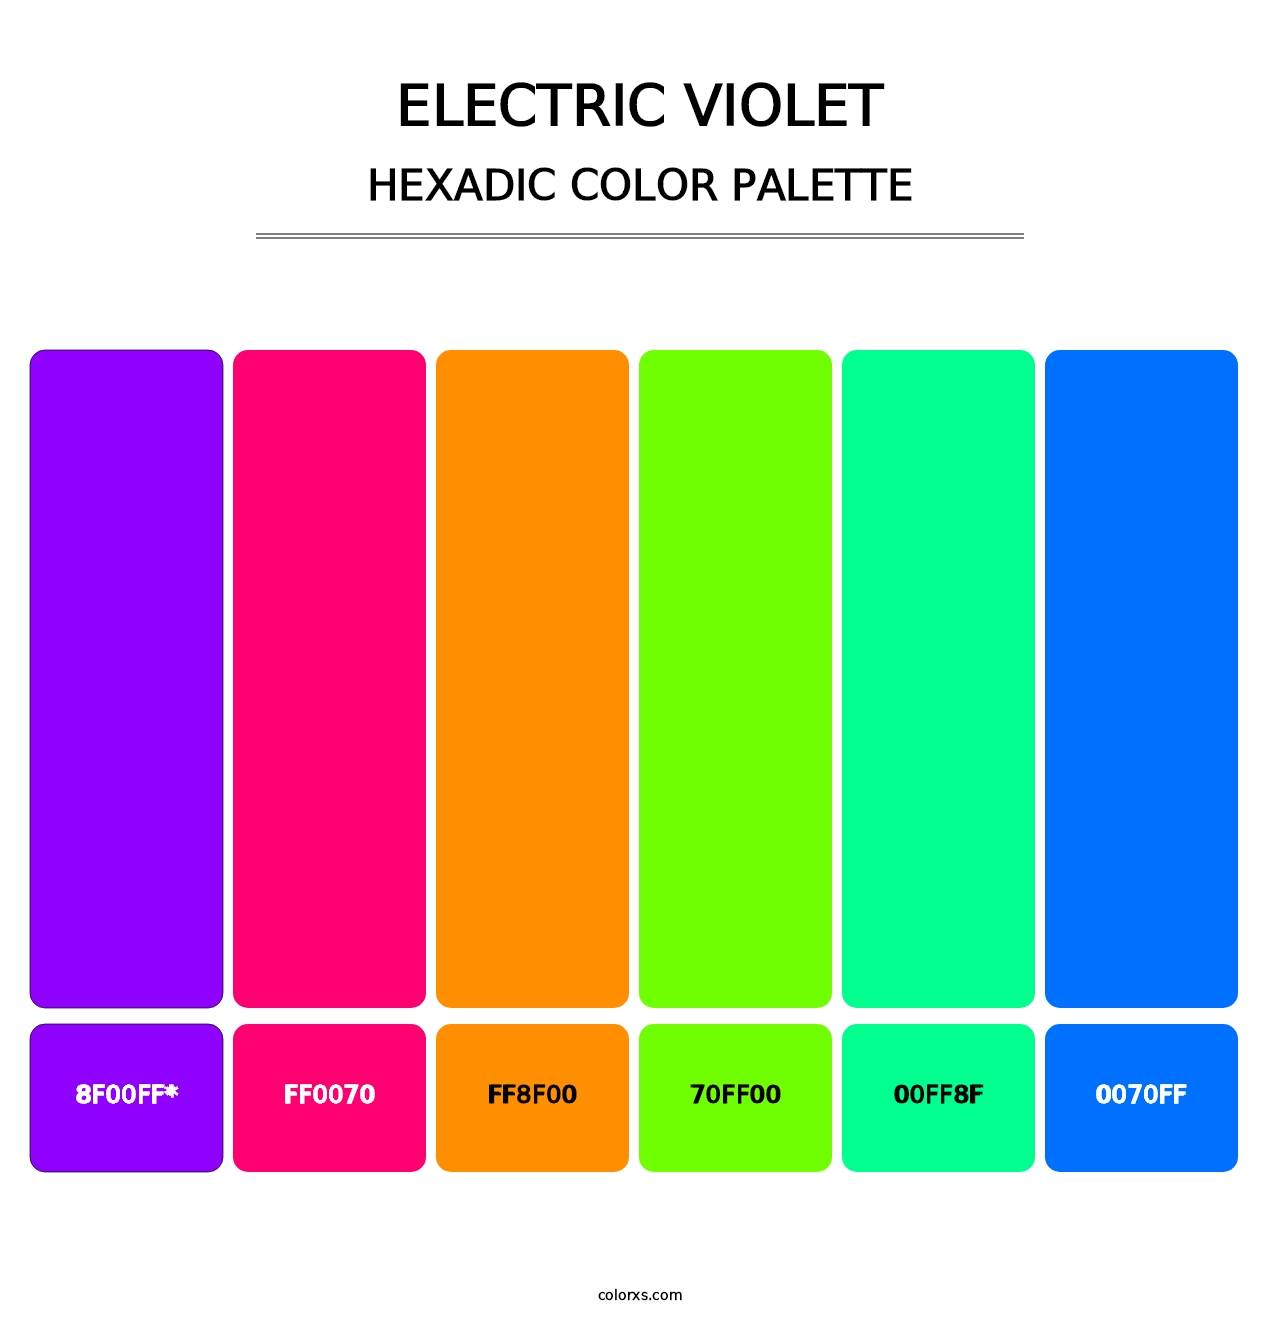 Electric Violet - Hexadic Color Palette